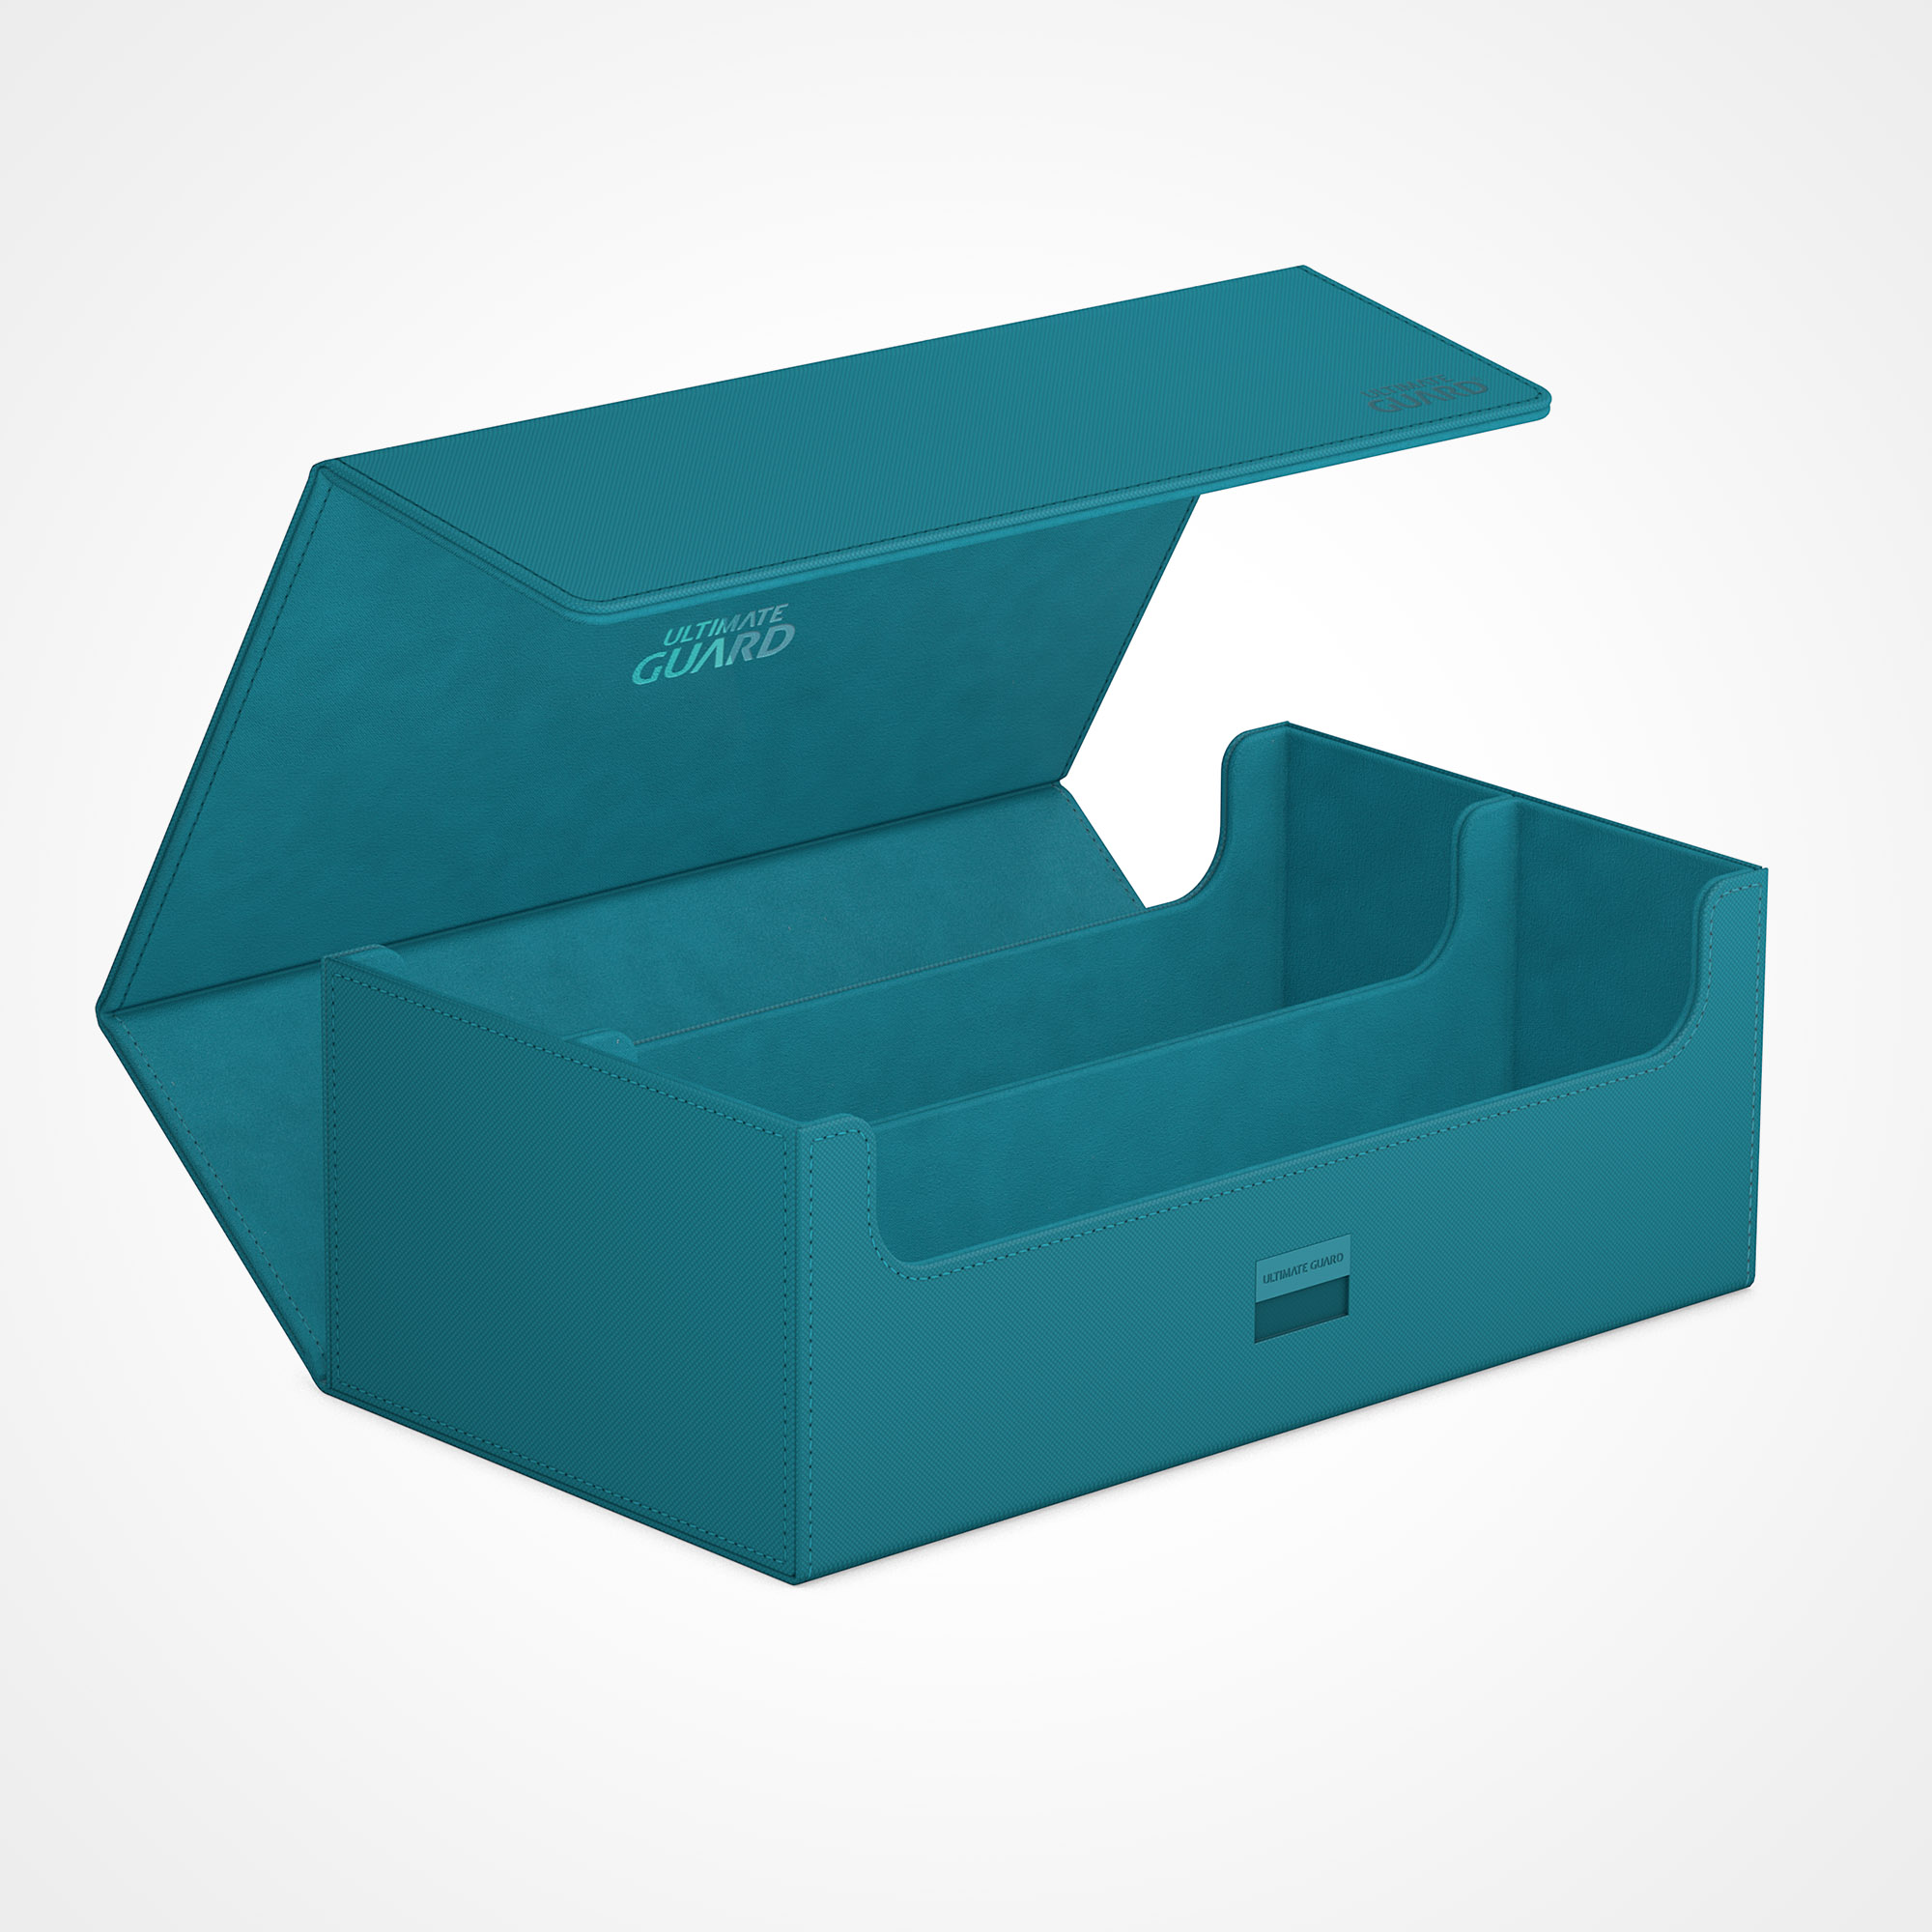 ULTIMATE GUARD FLIP n TRAY MAT CASE XENOSKIN GREY Game Playmat Storage Box MTG 